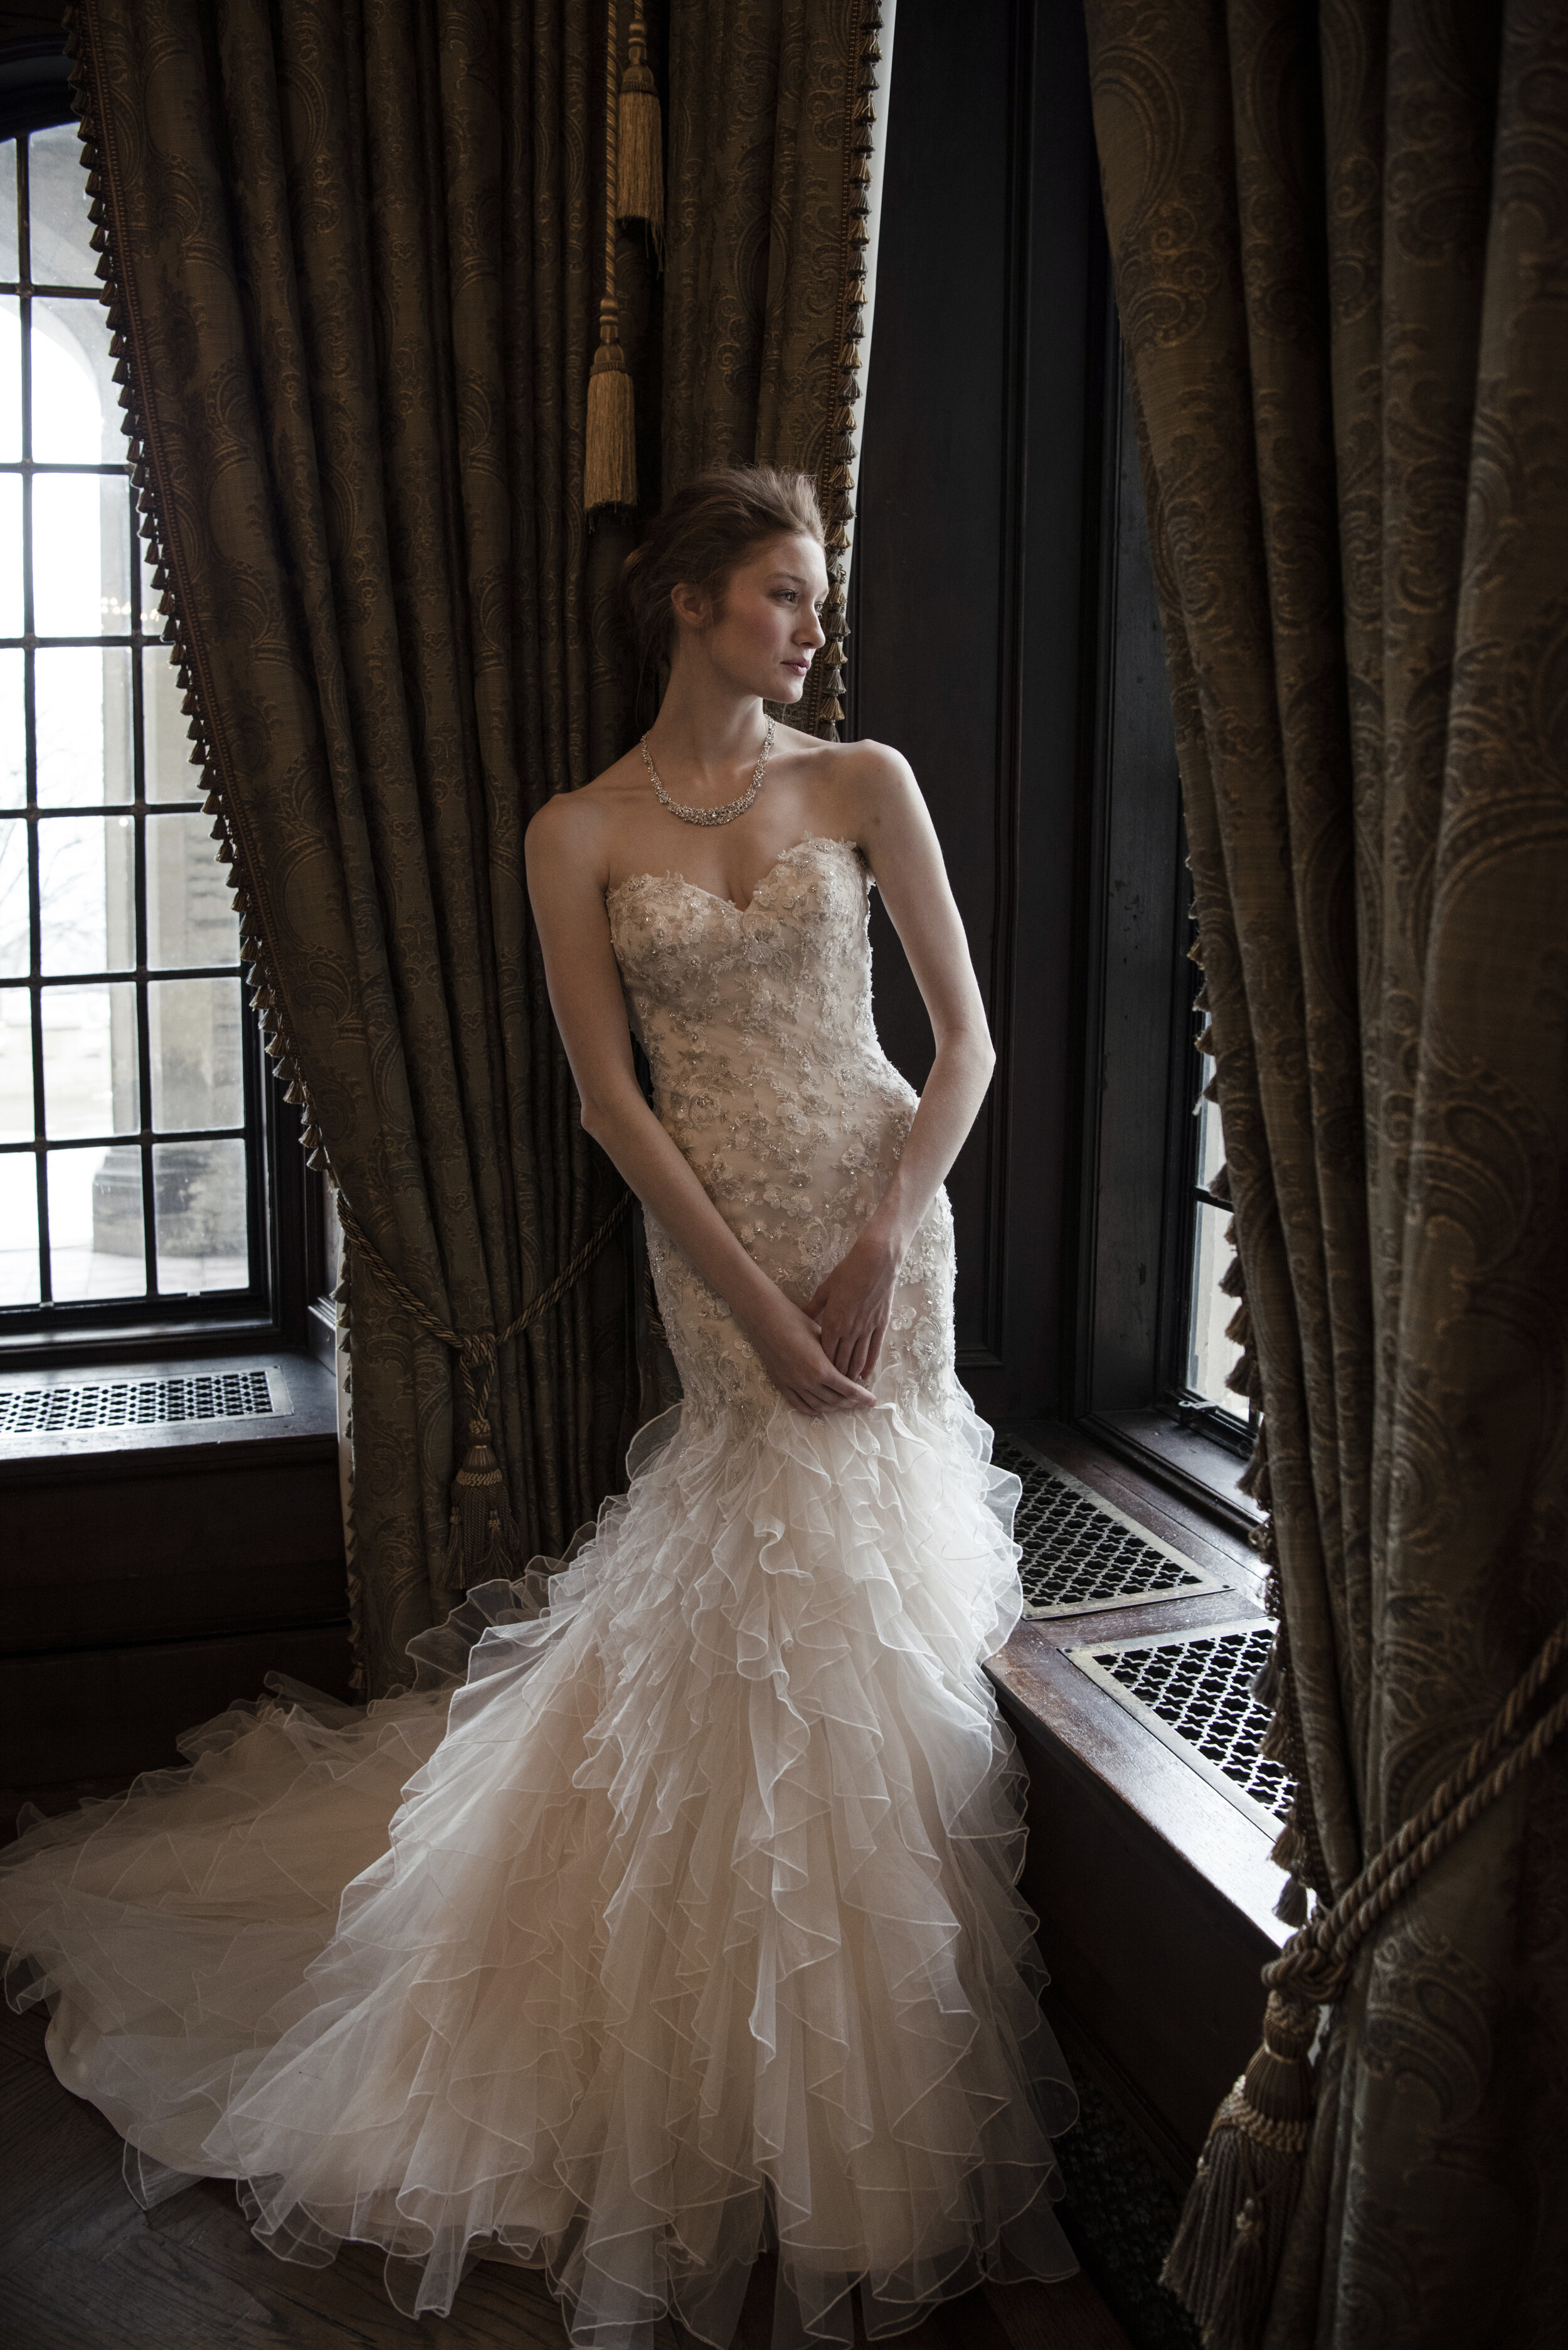 Bridal shoot, Casa Loma, Toronto, Fashion Shoot, Gown, Model by the window, shot on Nikon